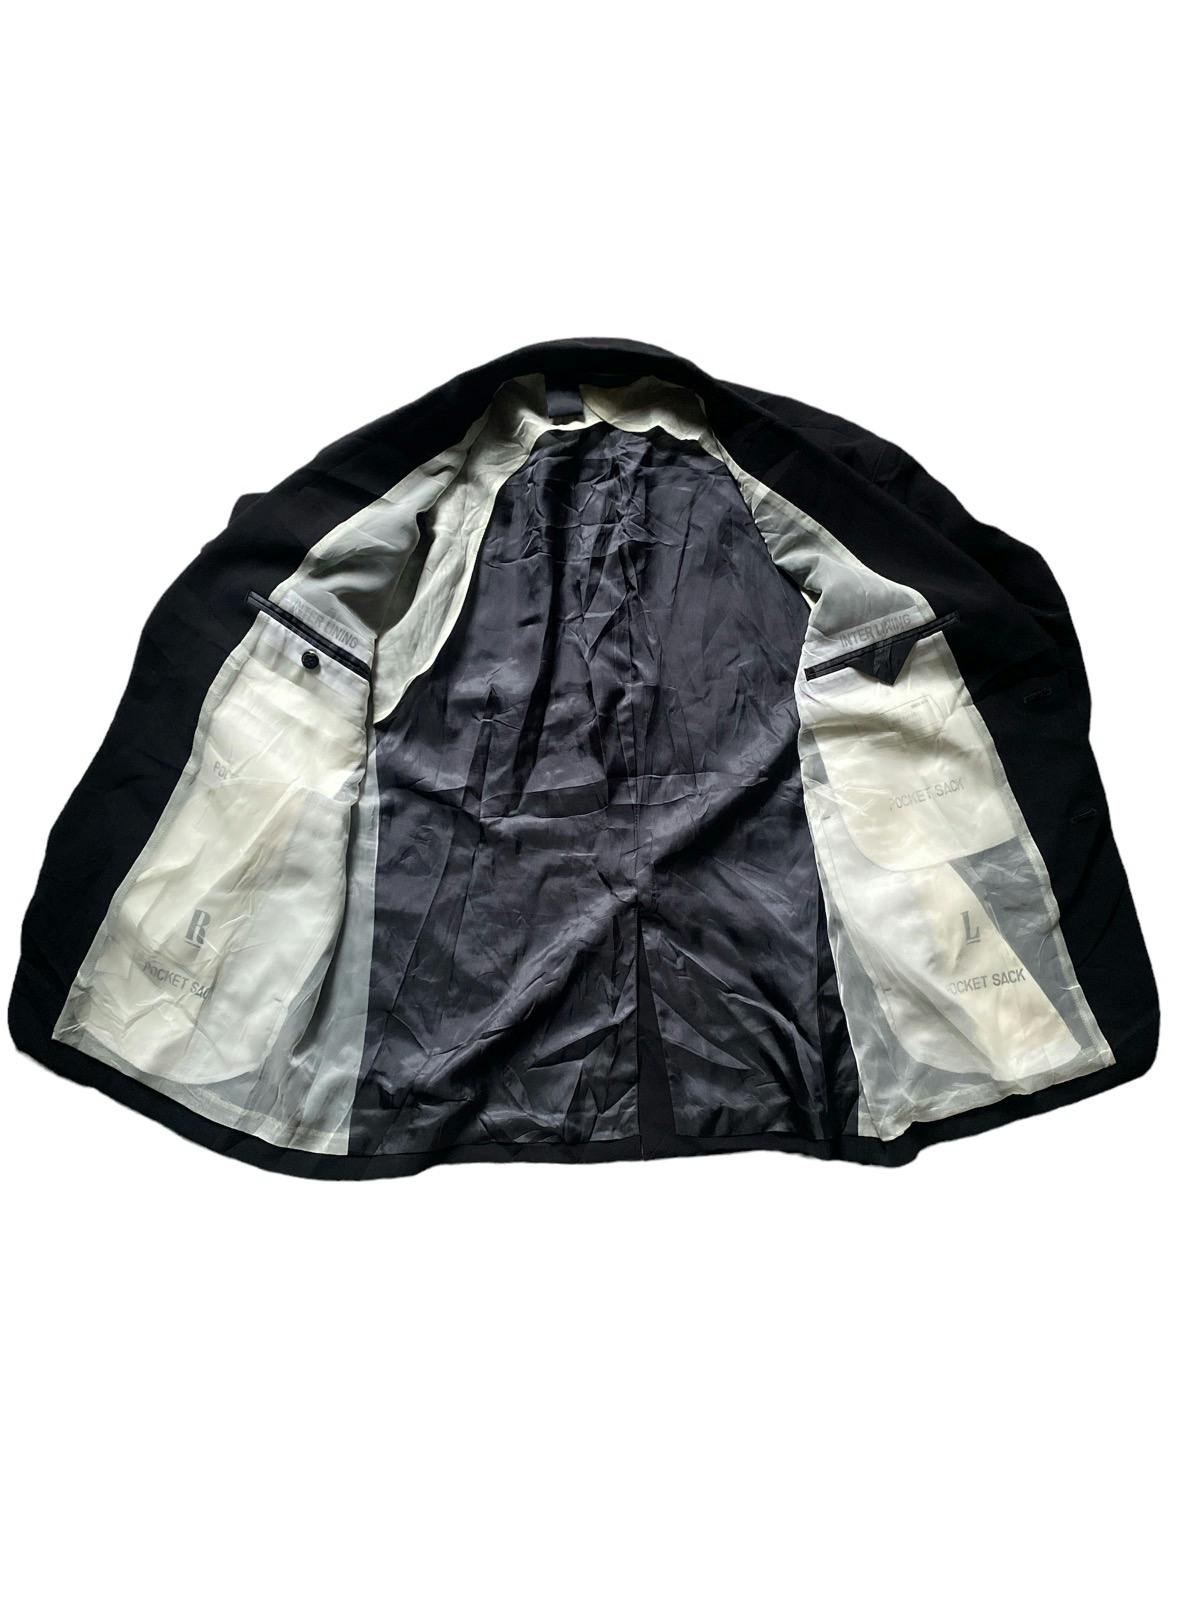 N. Hollywood Pocket Sack Uniforms Dress Suits Jacket Blazer - 2